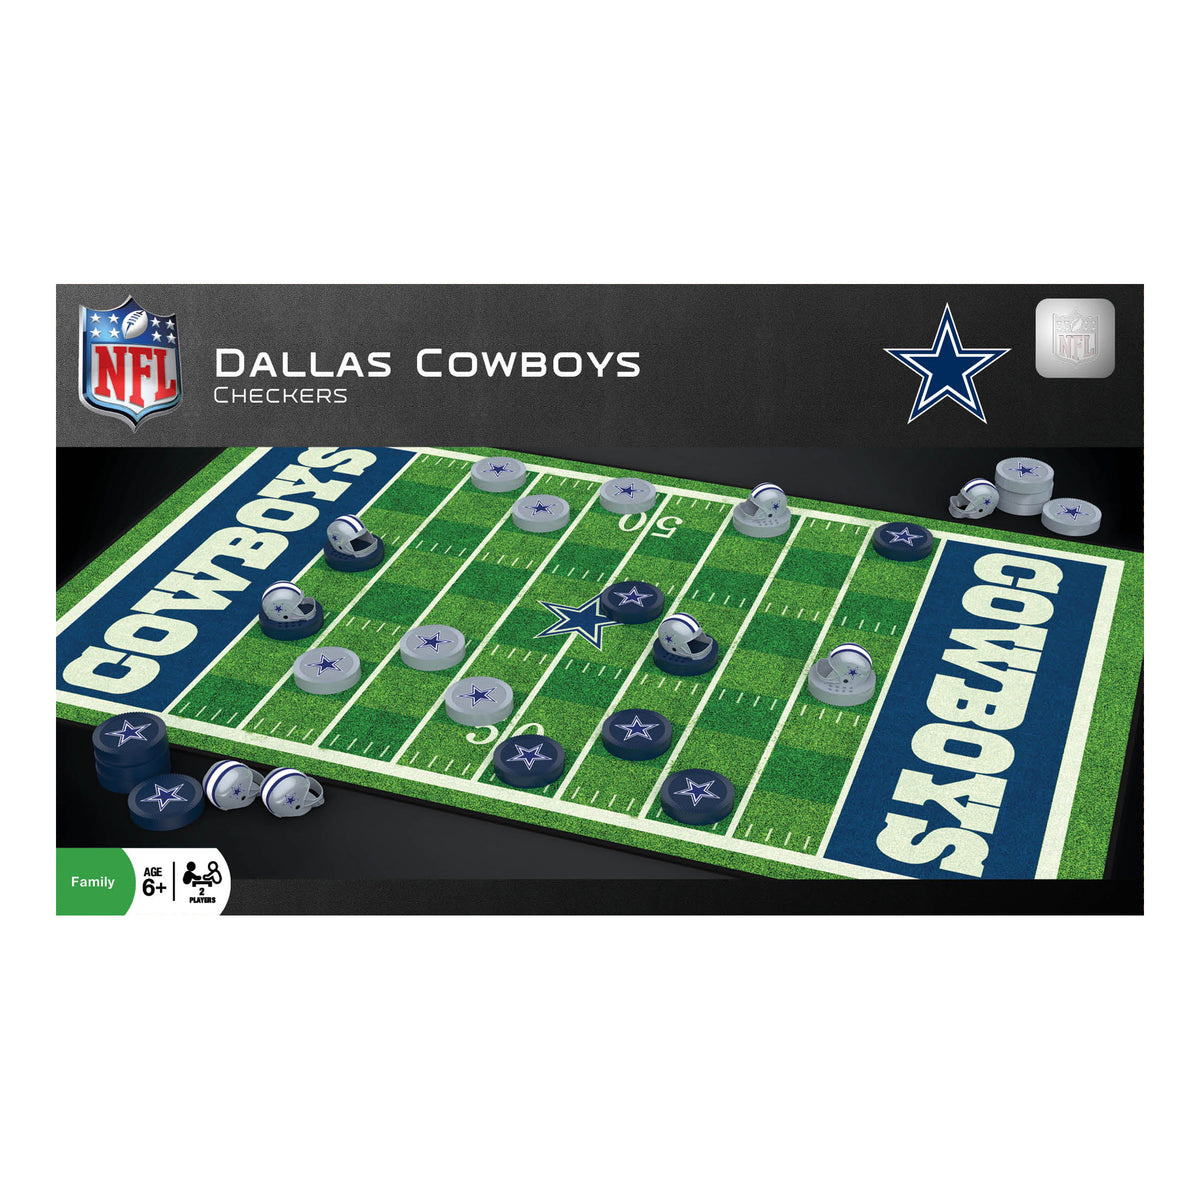 NFL Dallas Cowboys CHECKERS Game Americas Team Football FREE SHIPPING